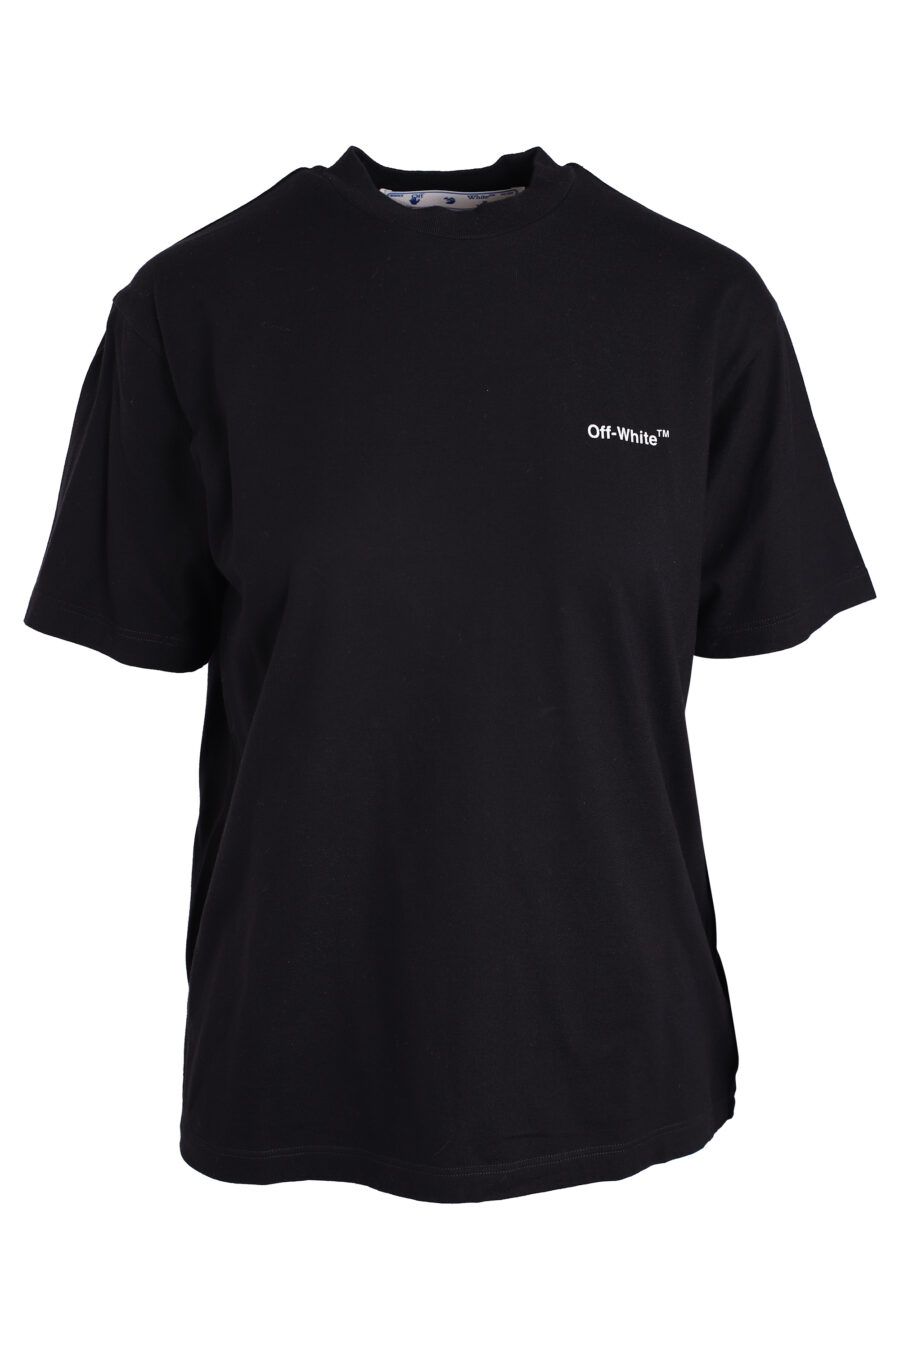 T-shirt preta com o logótipo "Diagonal regular" - IMG 3383